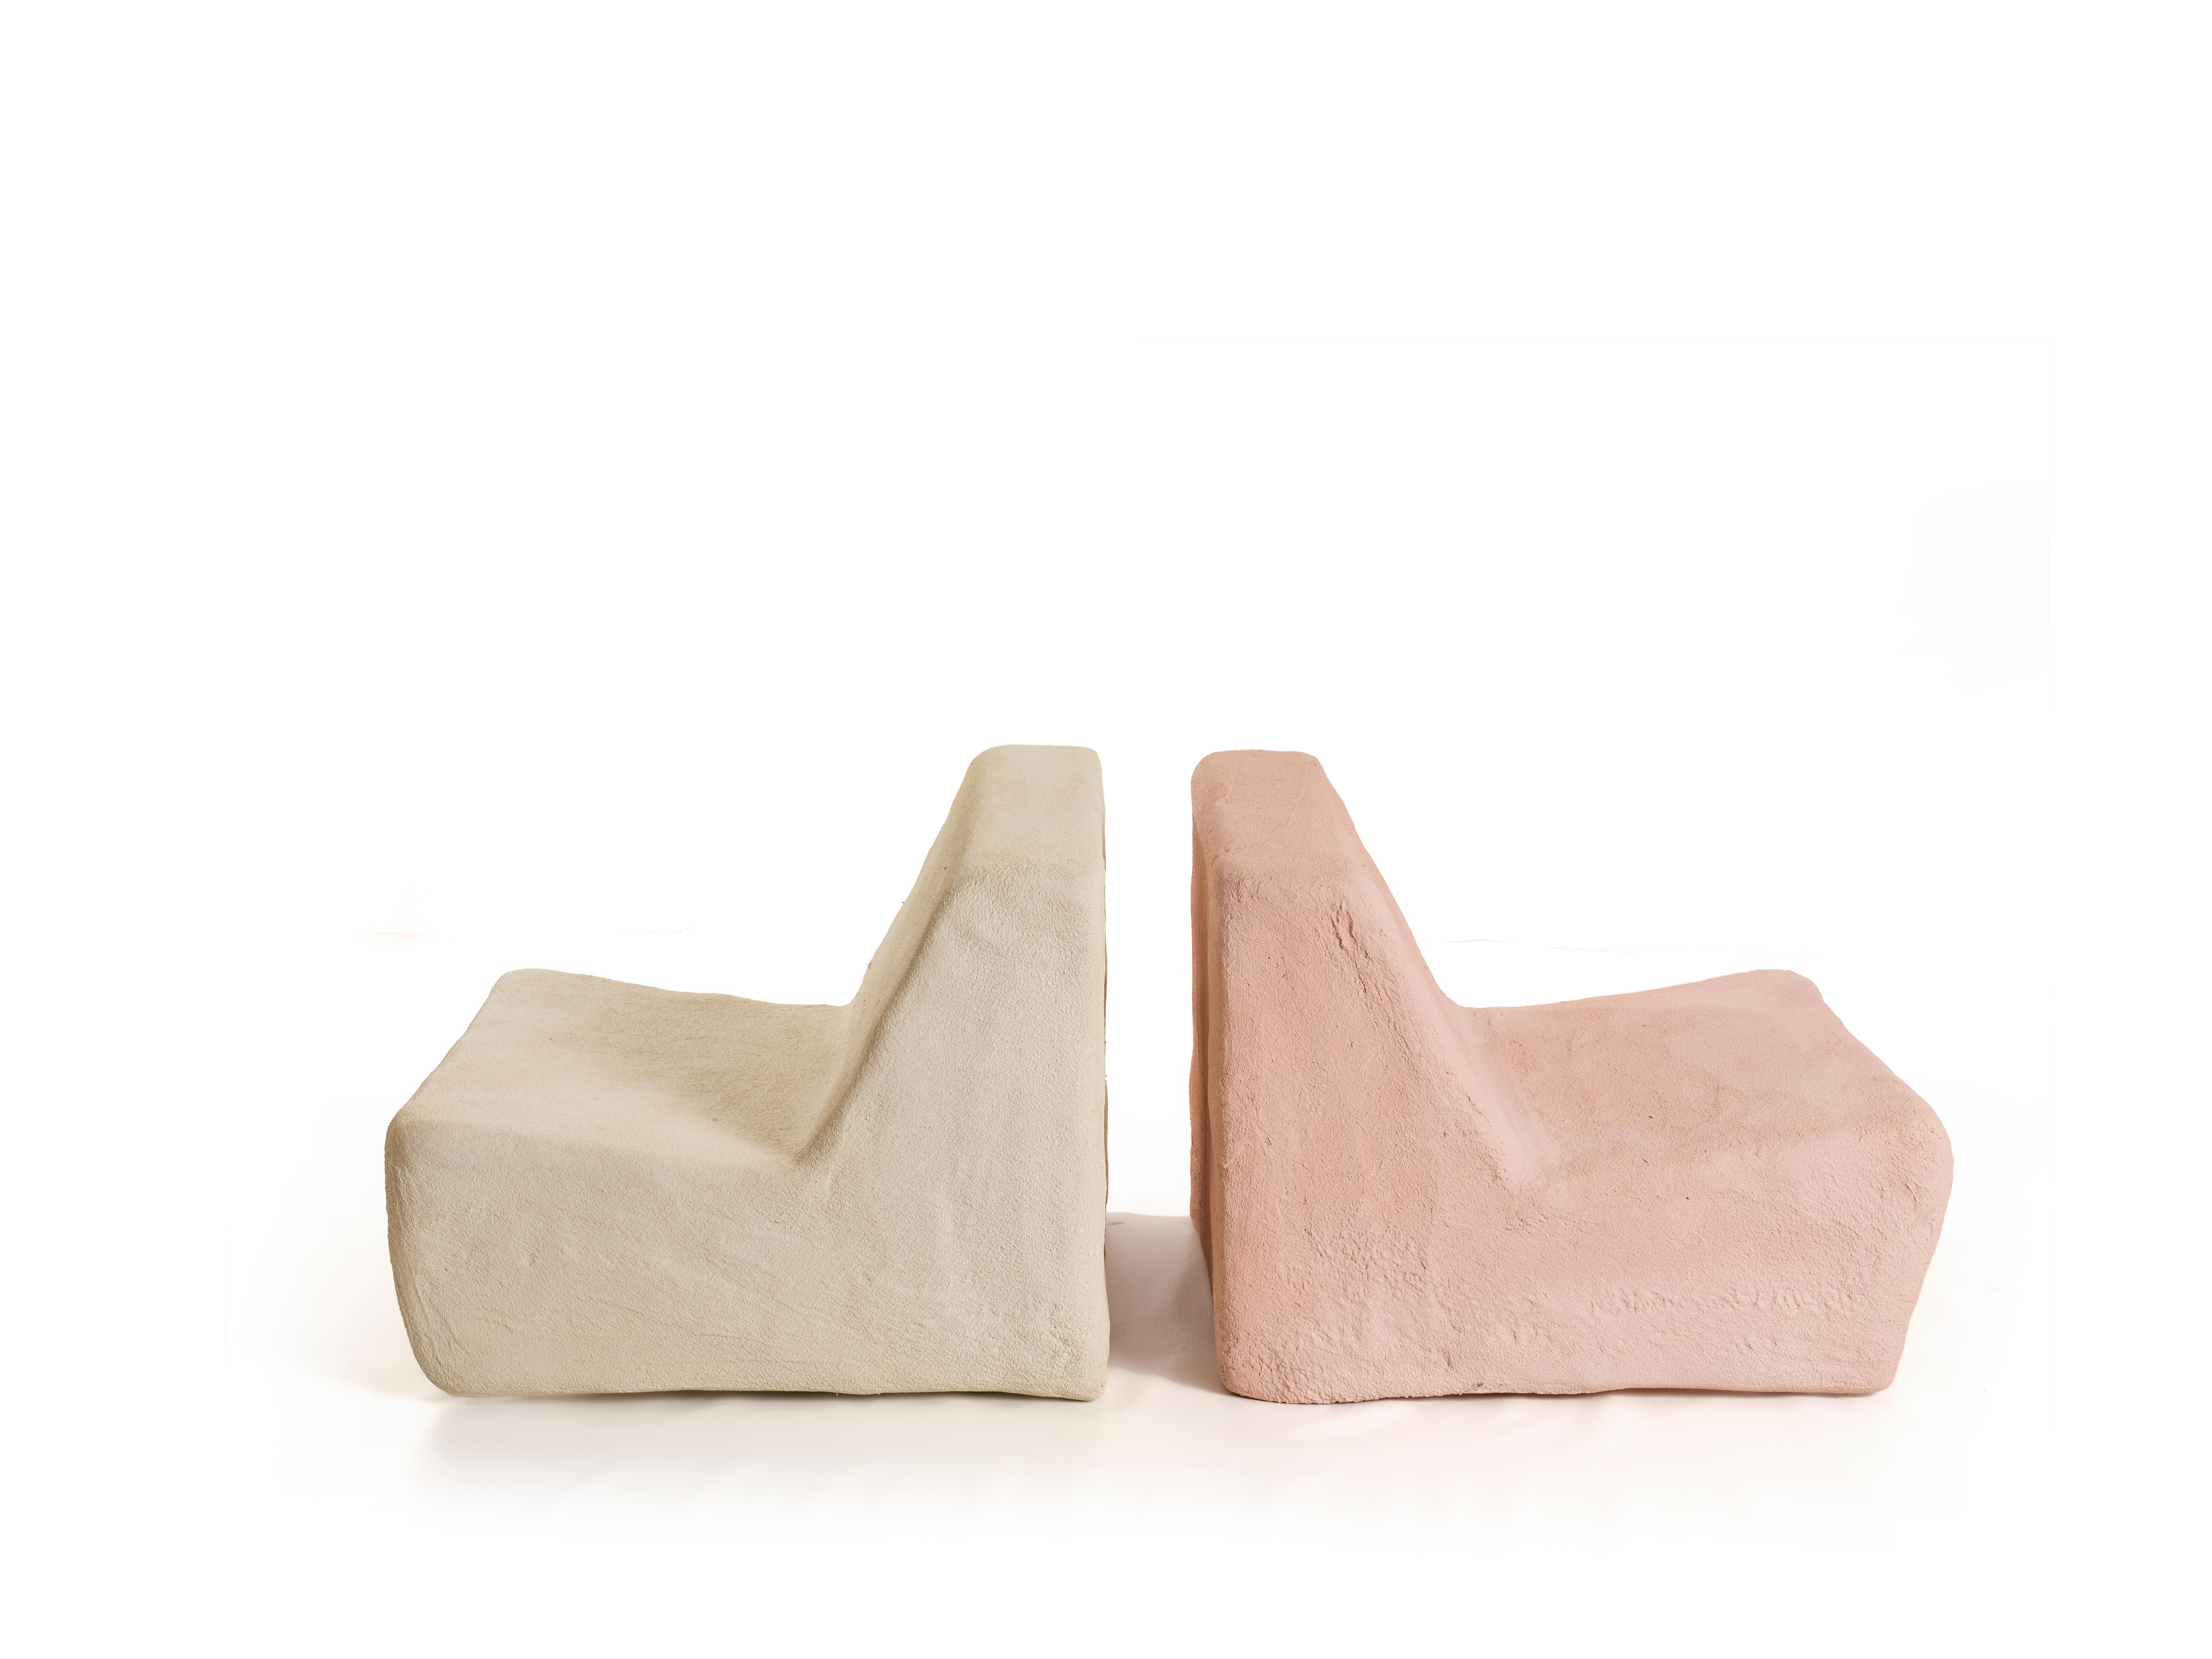 Modern Pair of Daisy Chair by Mary-Lynn & Carlo For Sale